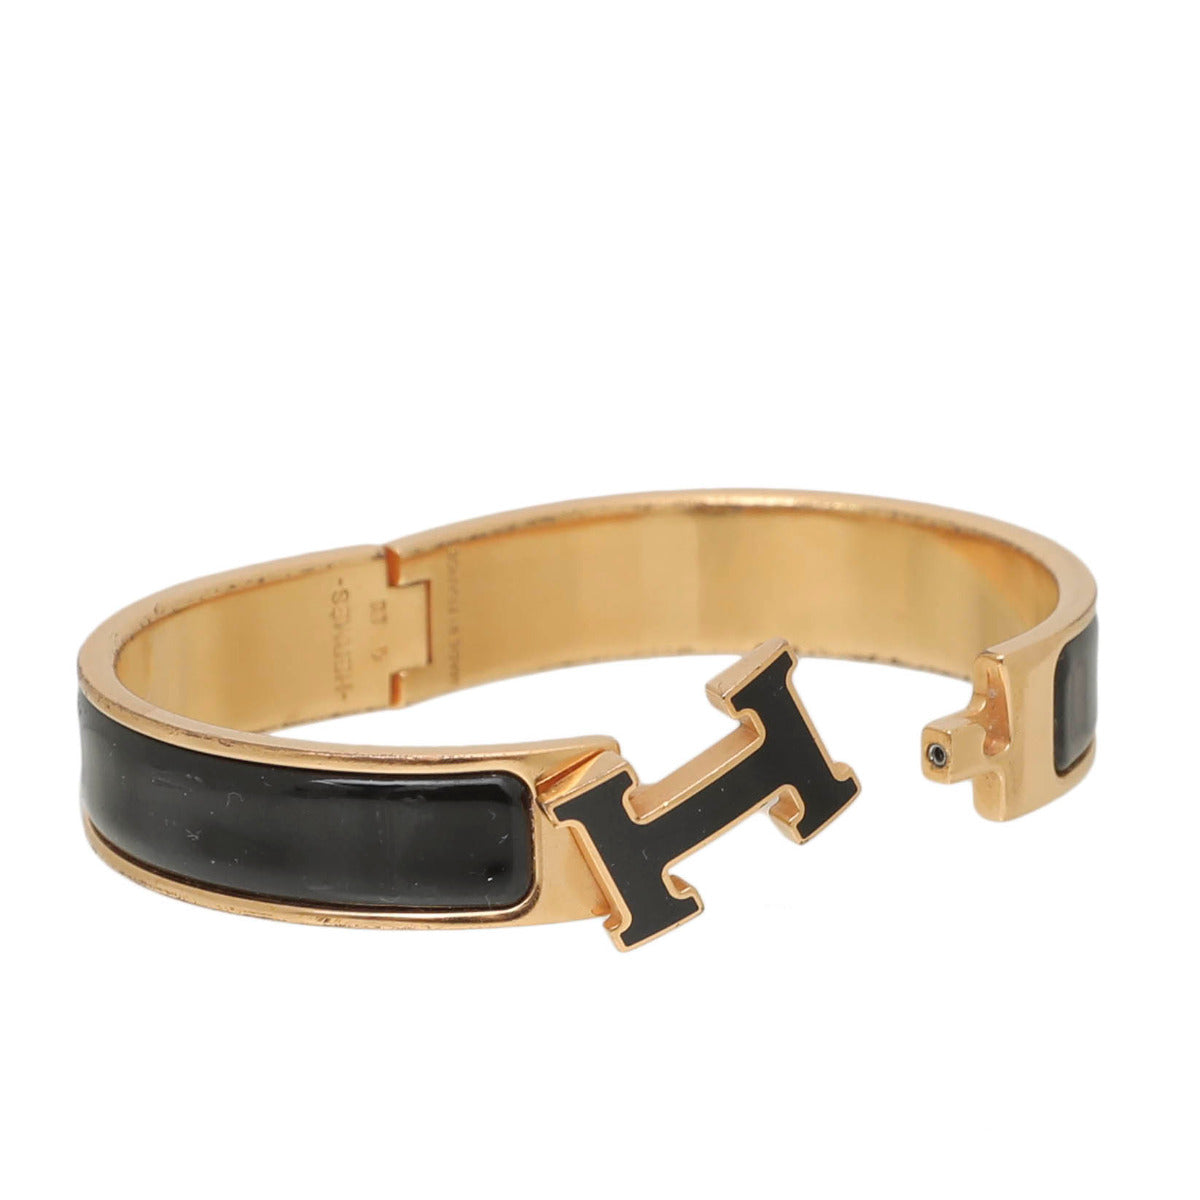 Bracelet leather hermes style black Online Wholesale | Orderchamp